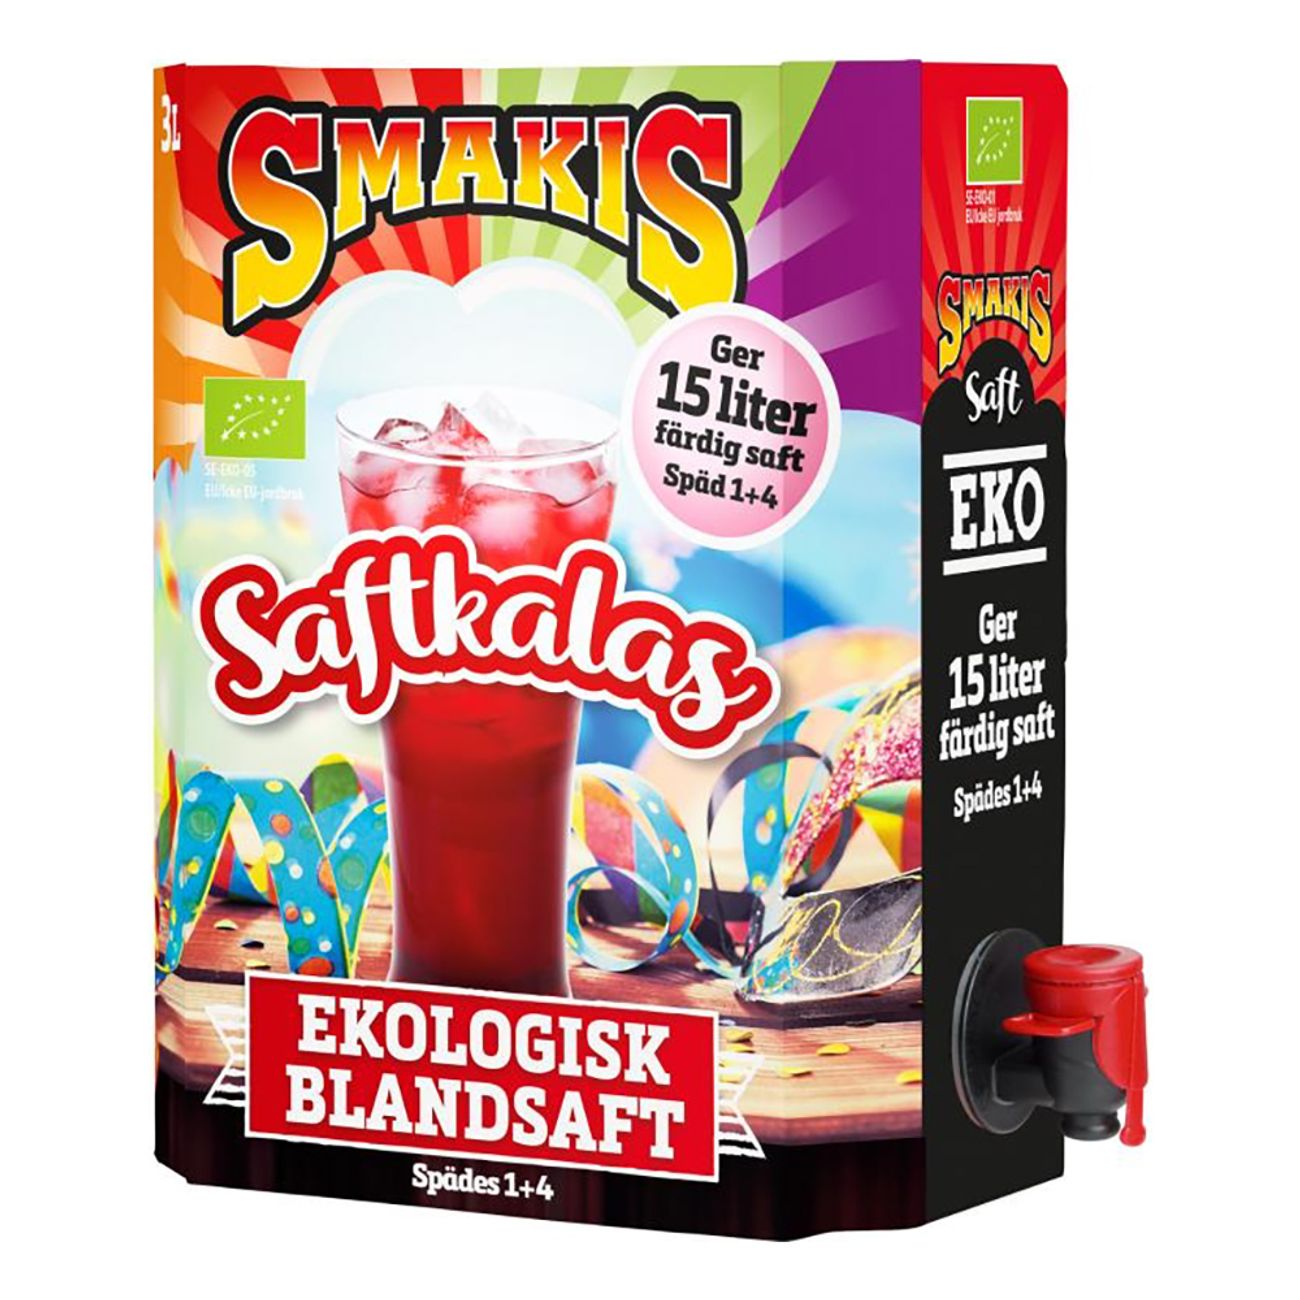 smakis-ekologisk-blandsaft-bag-in-box-78982-1